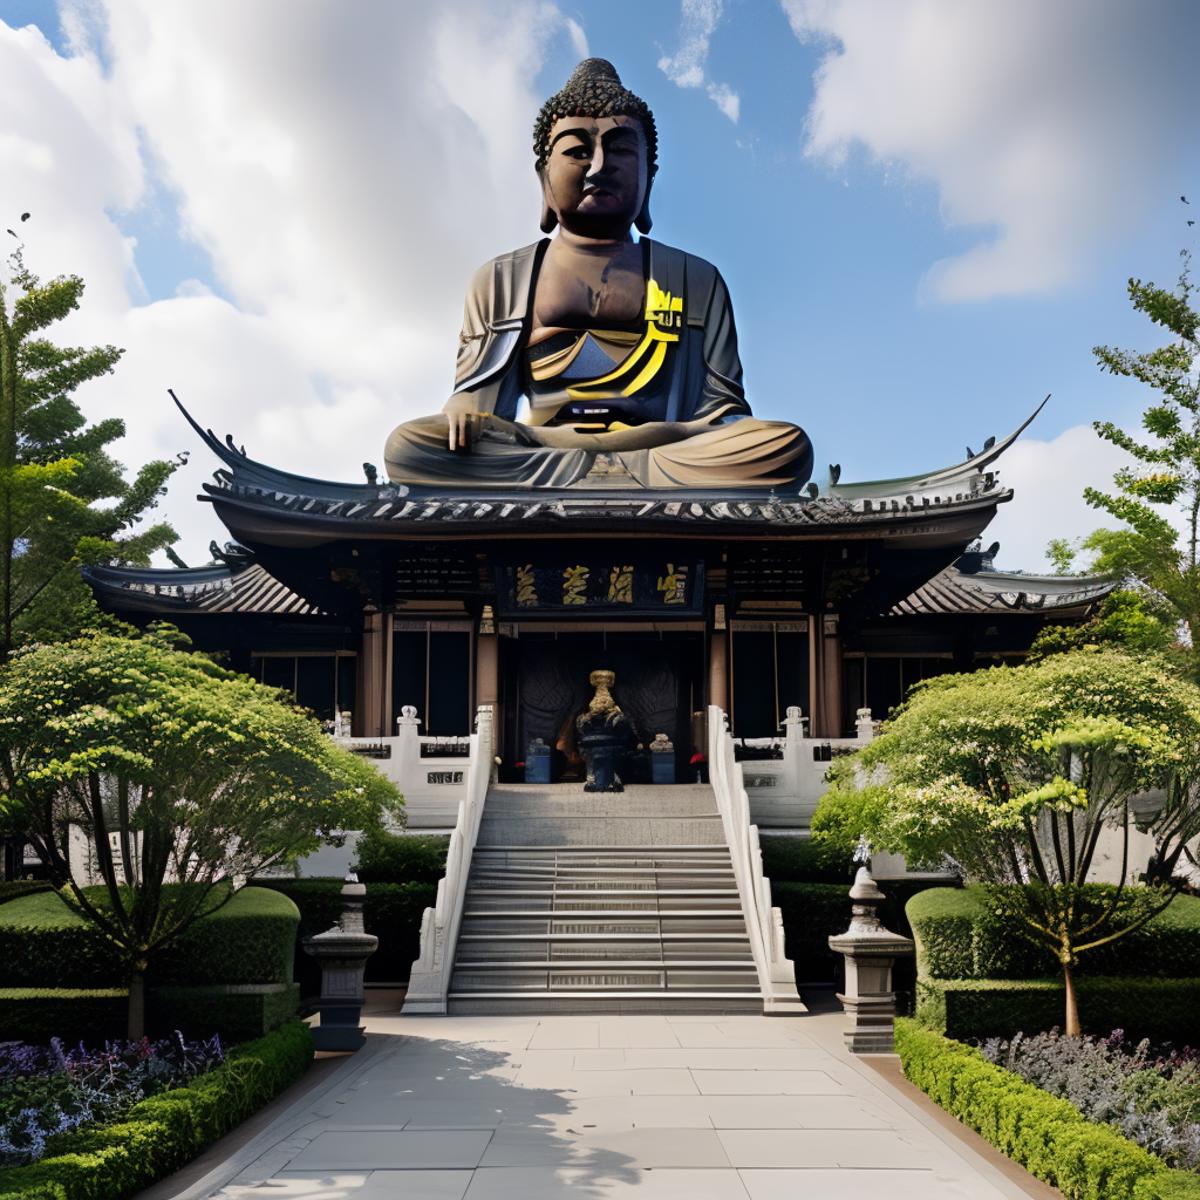 JJs Chinese Buddhist Temple image by jjhuang